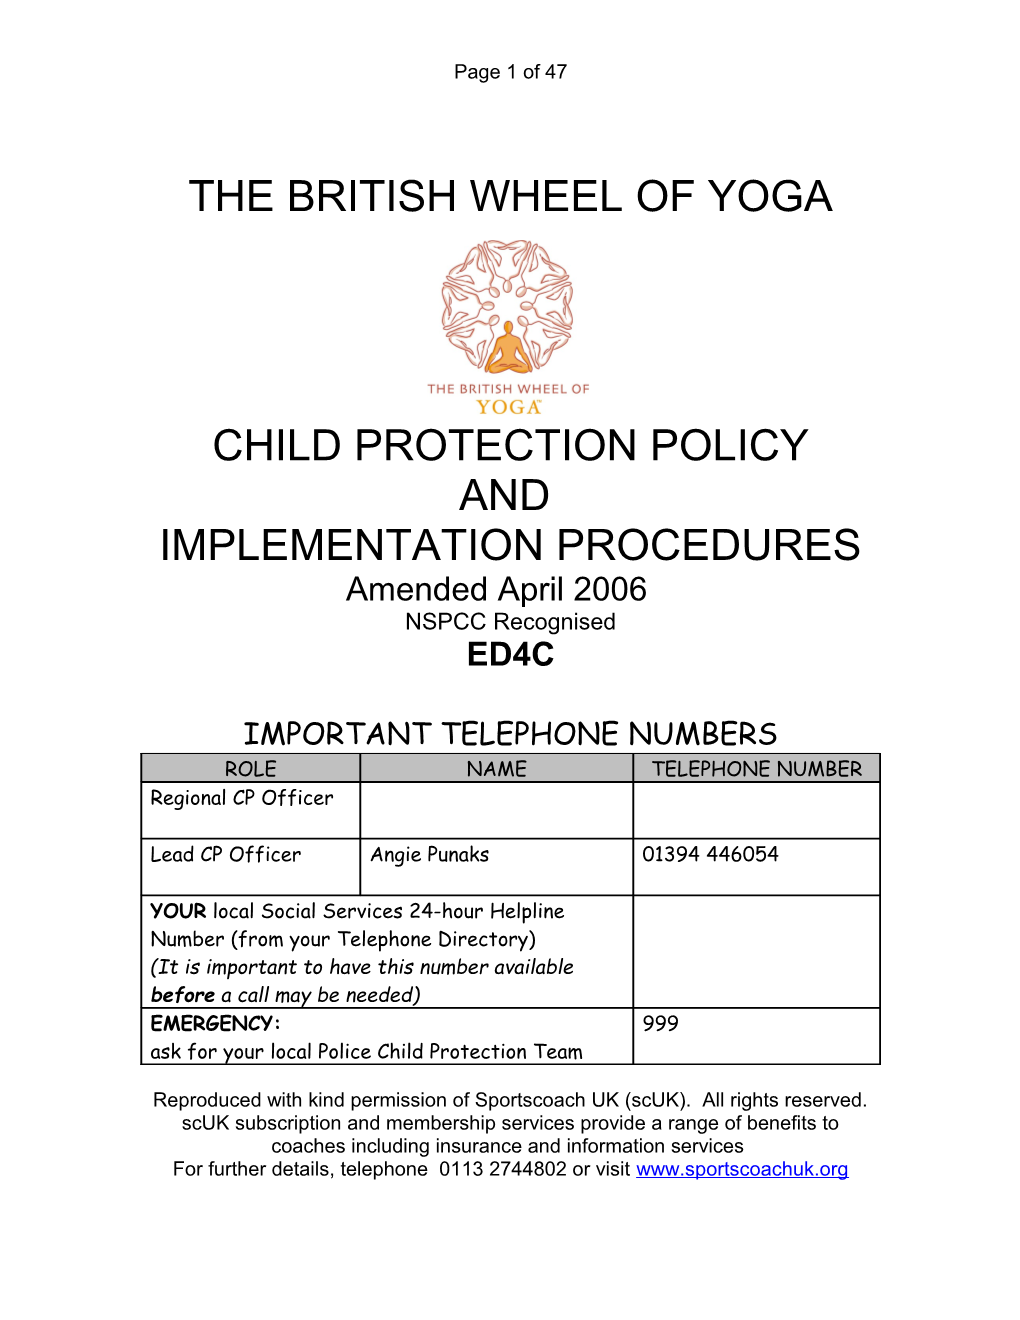 The British Wheel of Yoga